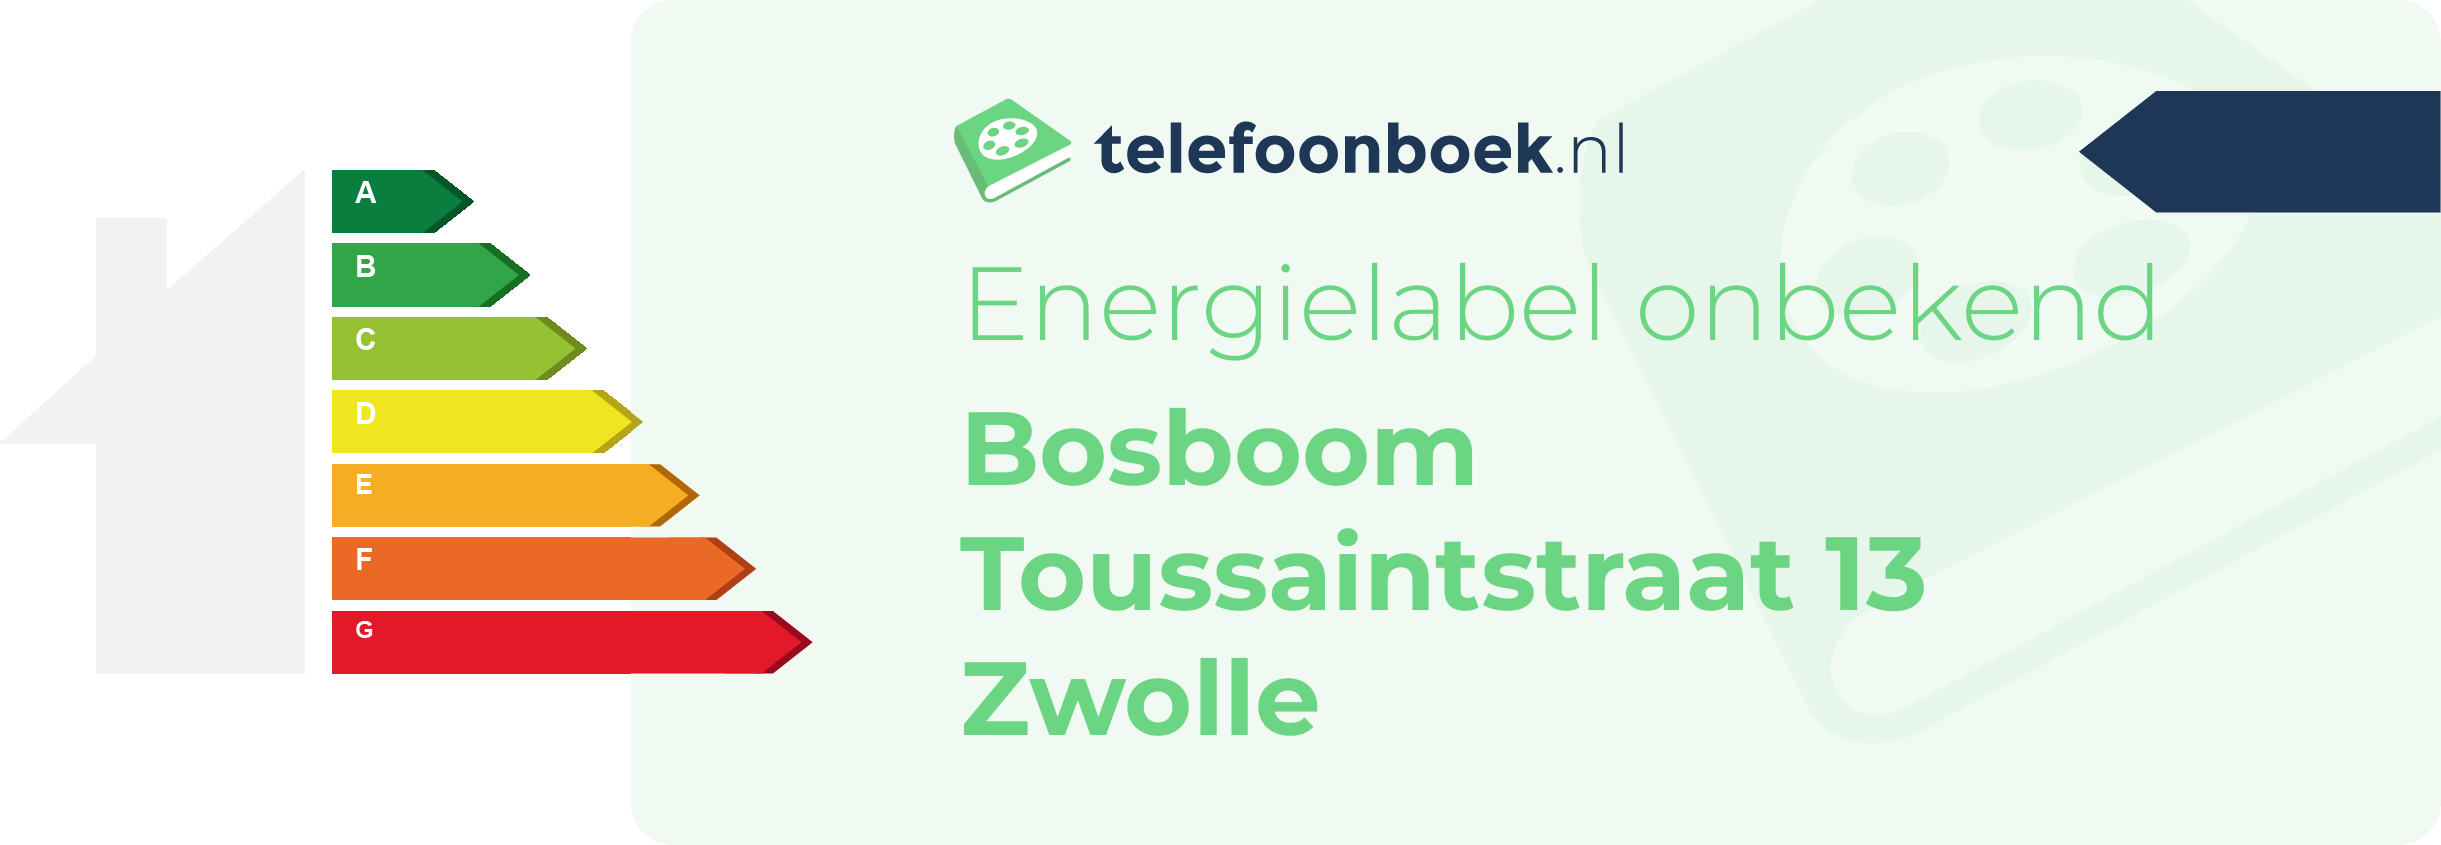 Energielabel Bosboom Toussaintstraat 13 Zwolle